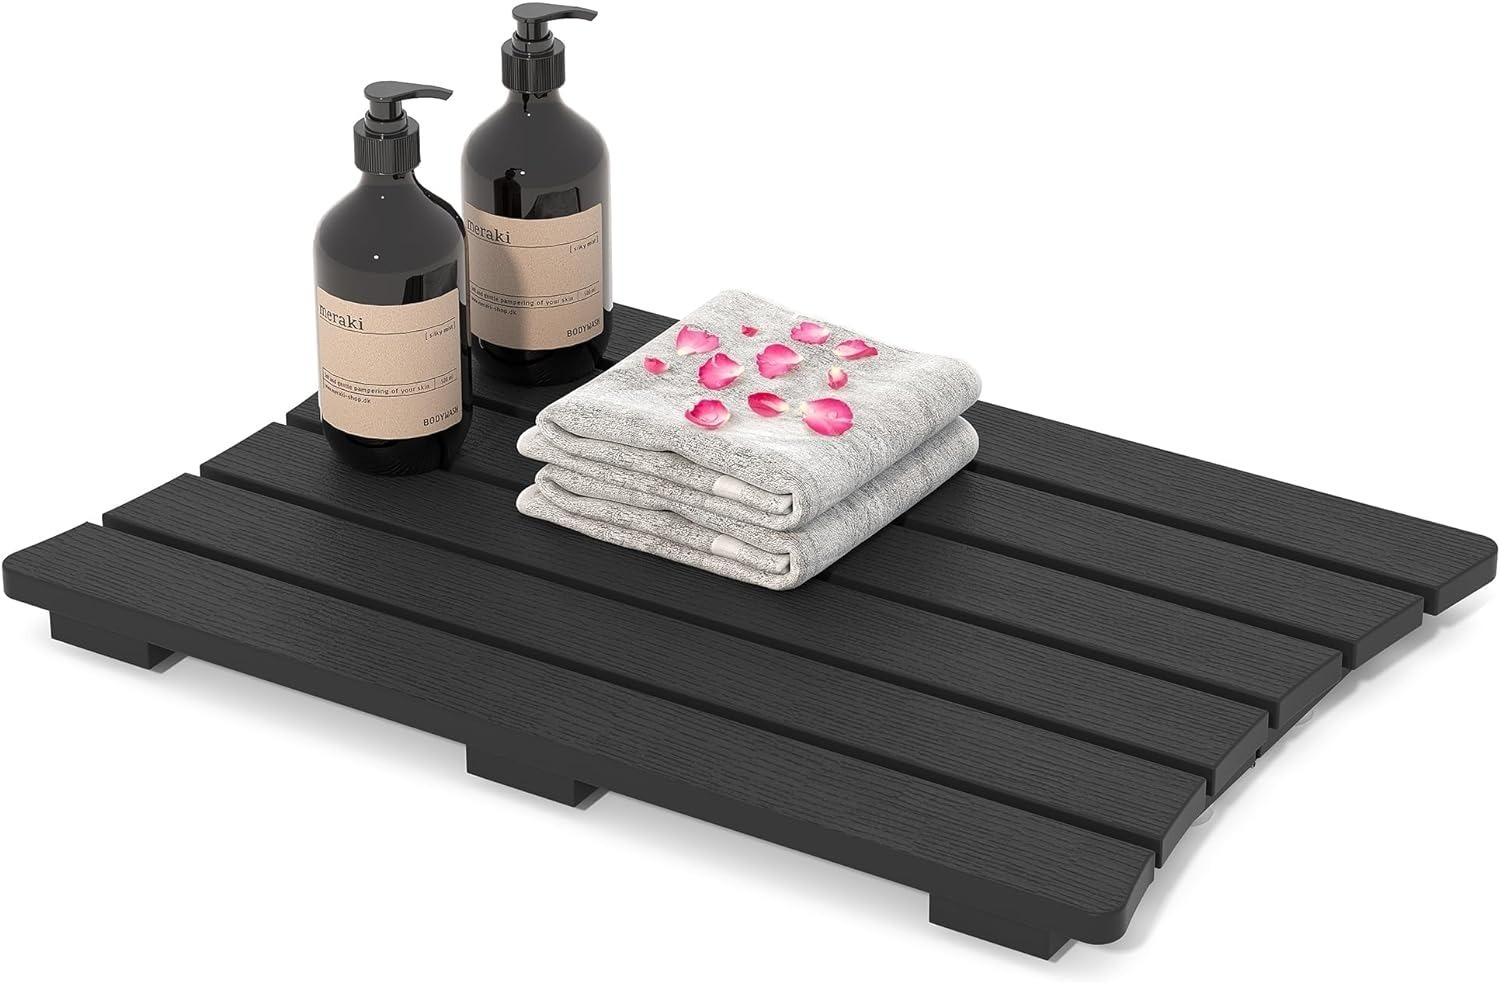 DWVO 22" x 15" Non-Slip Foldable Shower Mat (Teak or Black) $18.30 + Free Shipping w/ Prime or $35+ orders